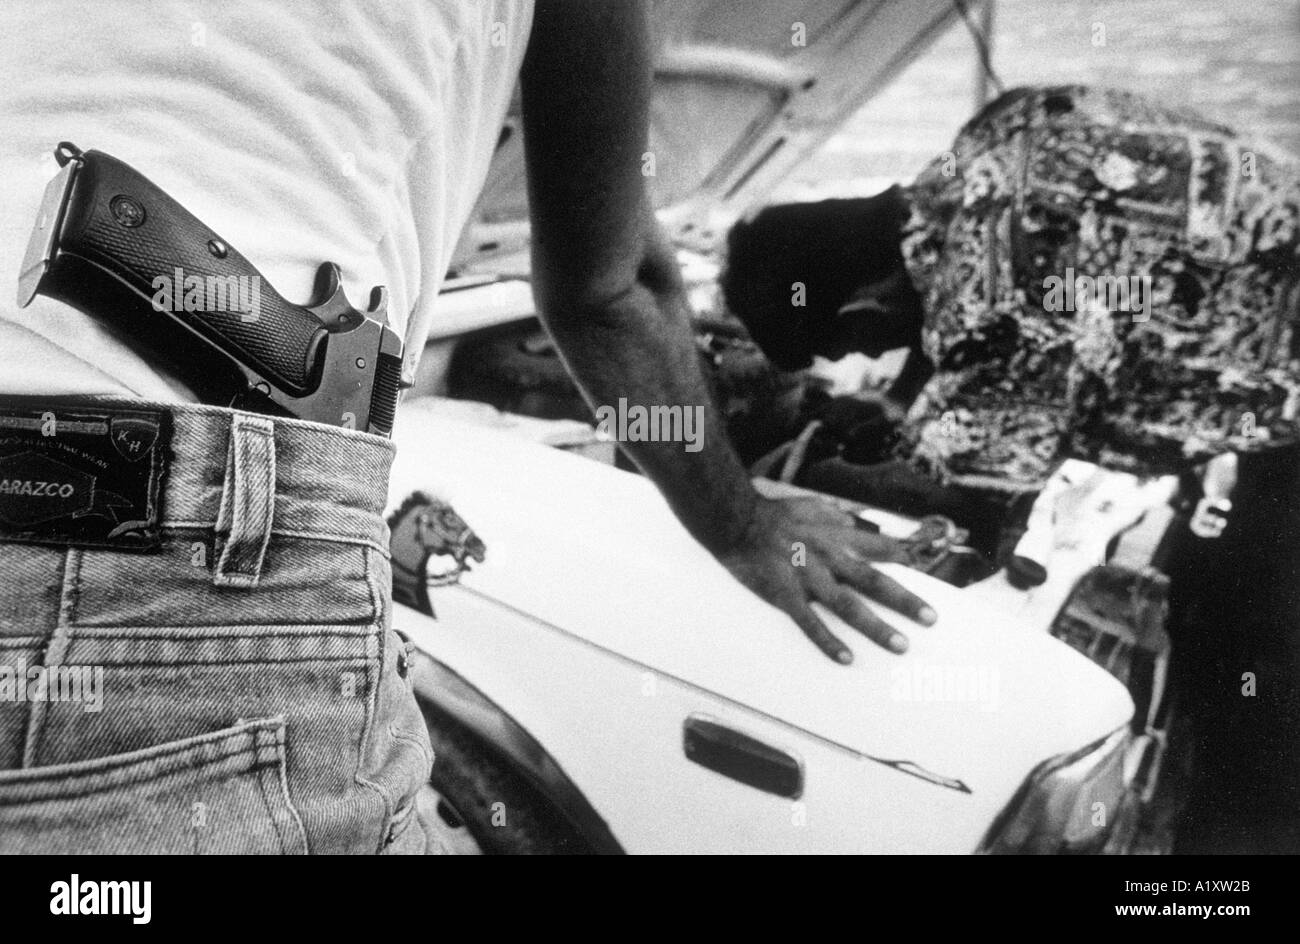 PALESTINIAN COLLABORATORS FIXING THE CAR 1992 Stock Photo